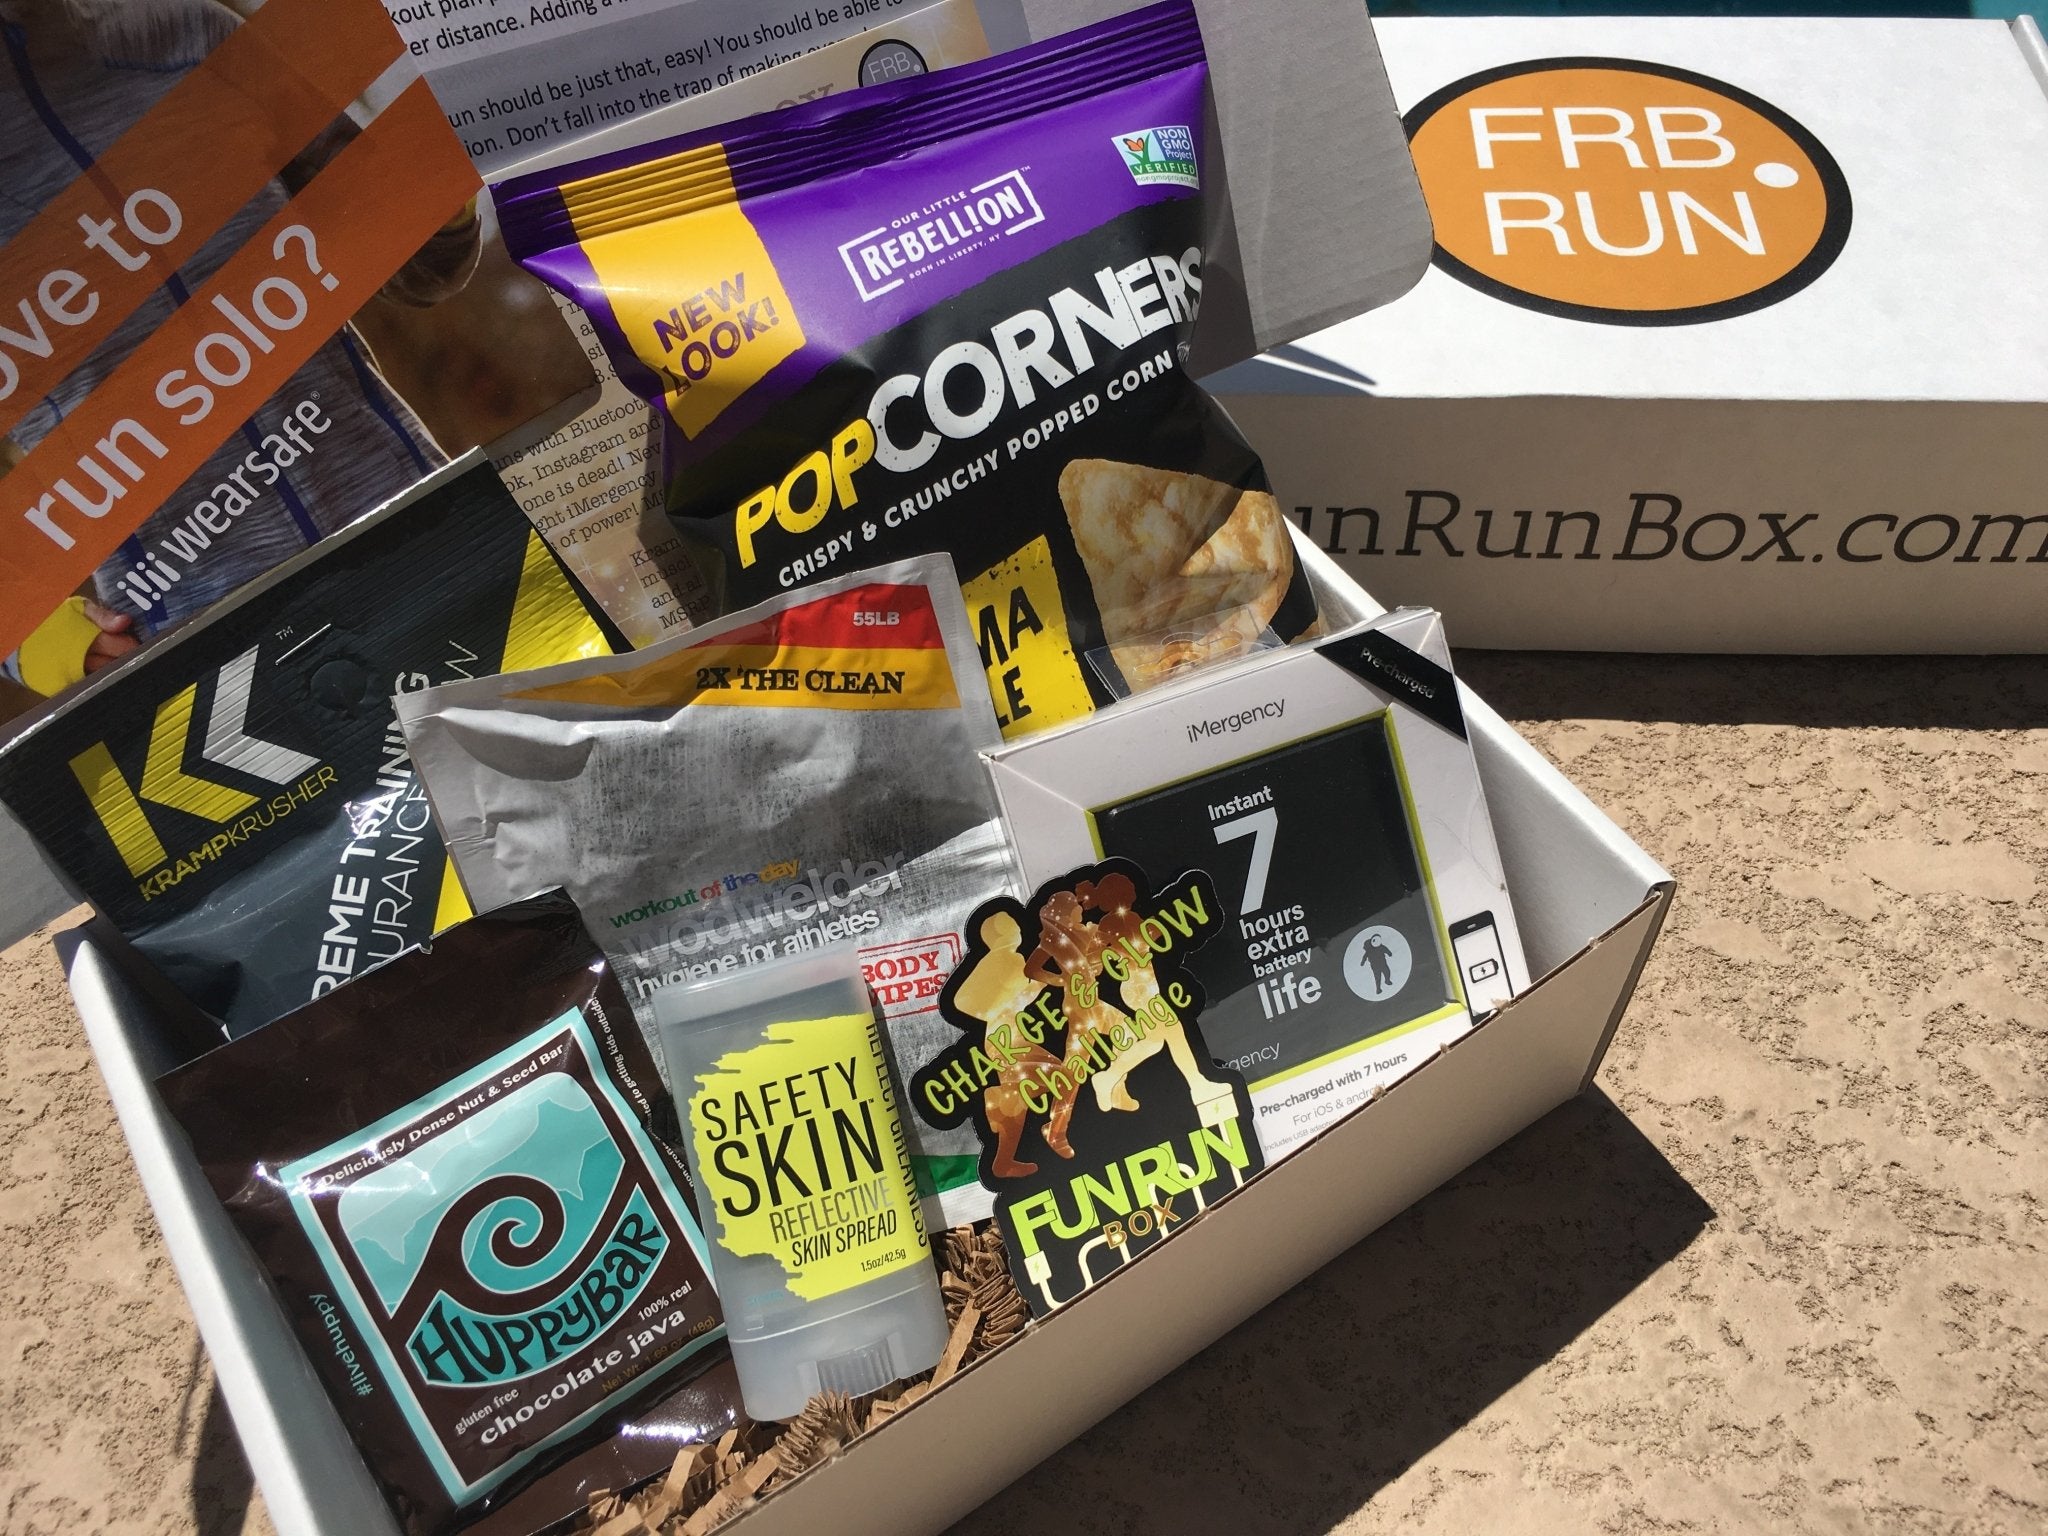 Ladies Fun Run Box Subscription 2019 - Fun Run Box